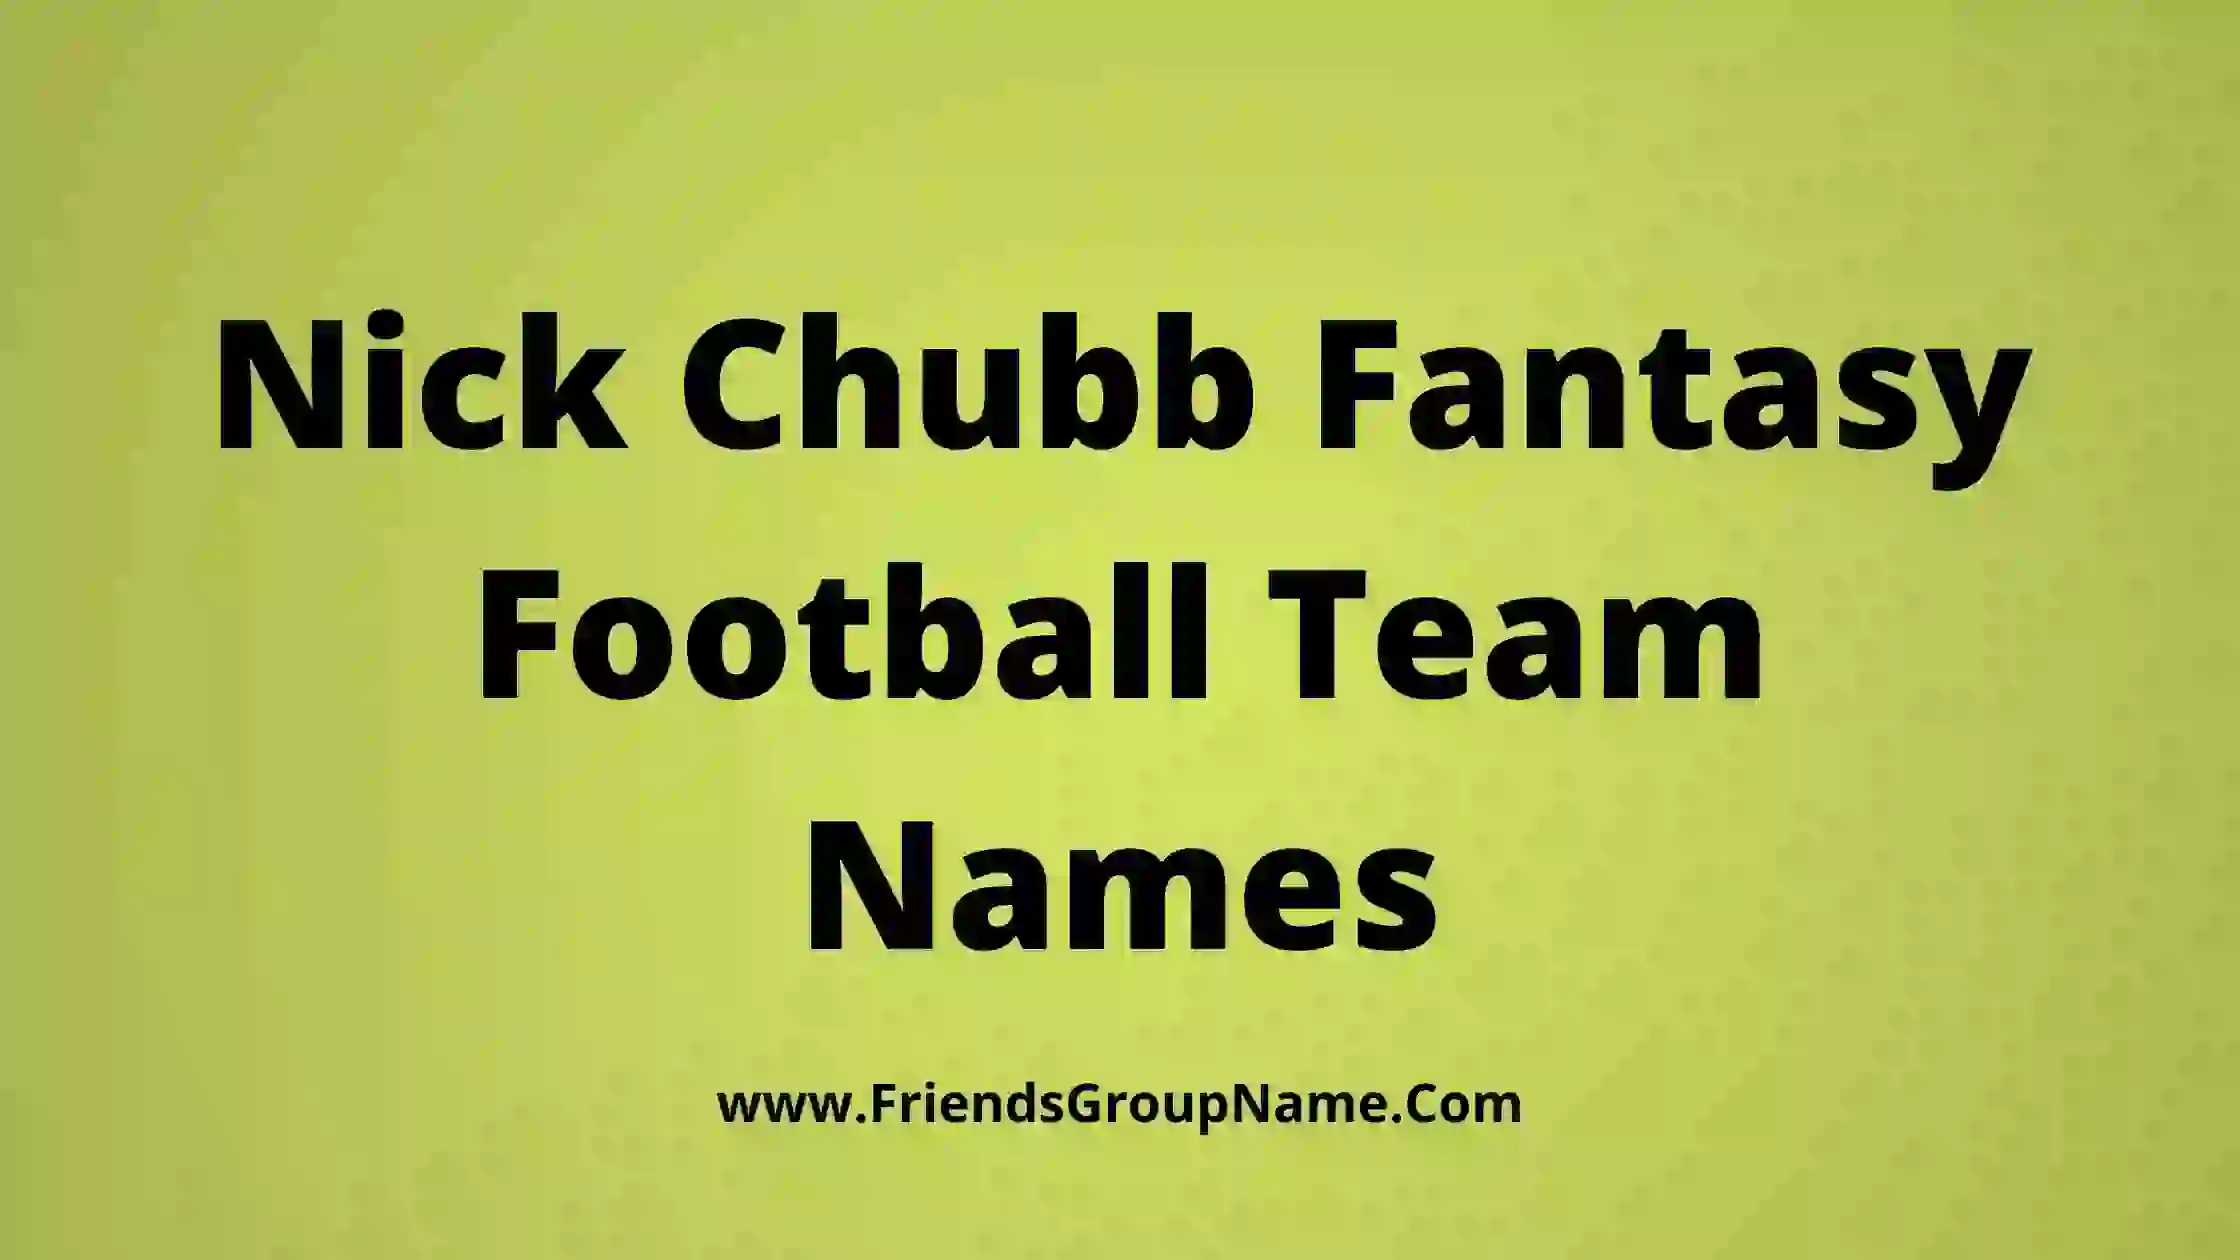 Nick Chubb Fantasy Names, Nick Chubb Fantasy Team Names, Nick Chubb Fantasy Football Team Names